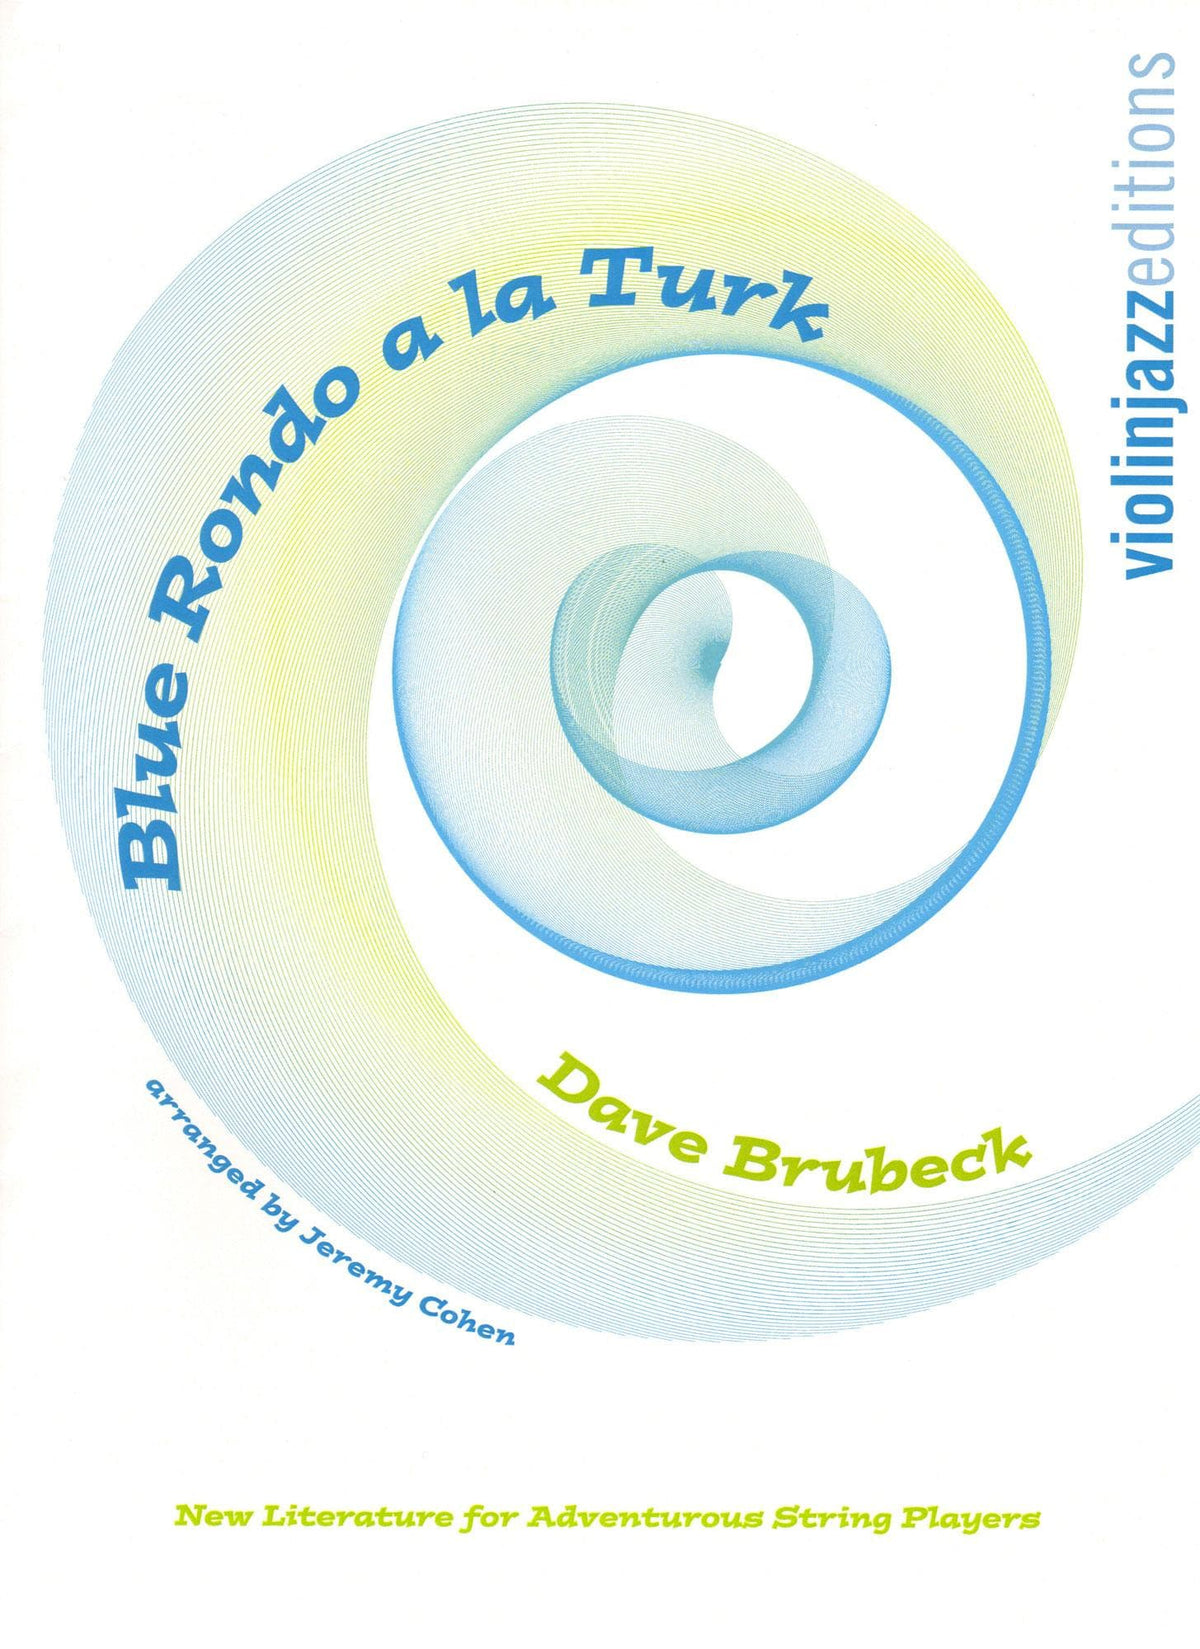 Brubeck, Dave - Blue Rondo a la Turk - for String Quintet - Violinjazz Editions